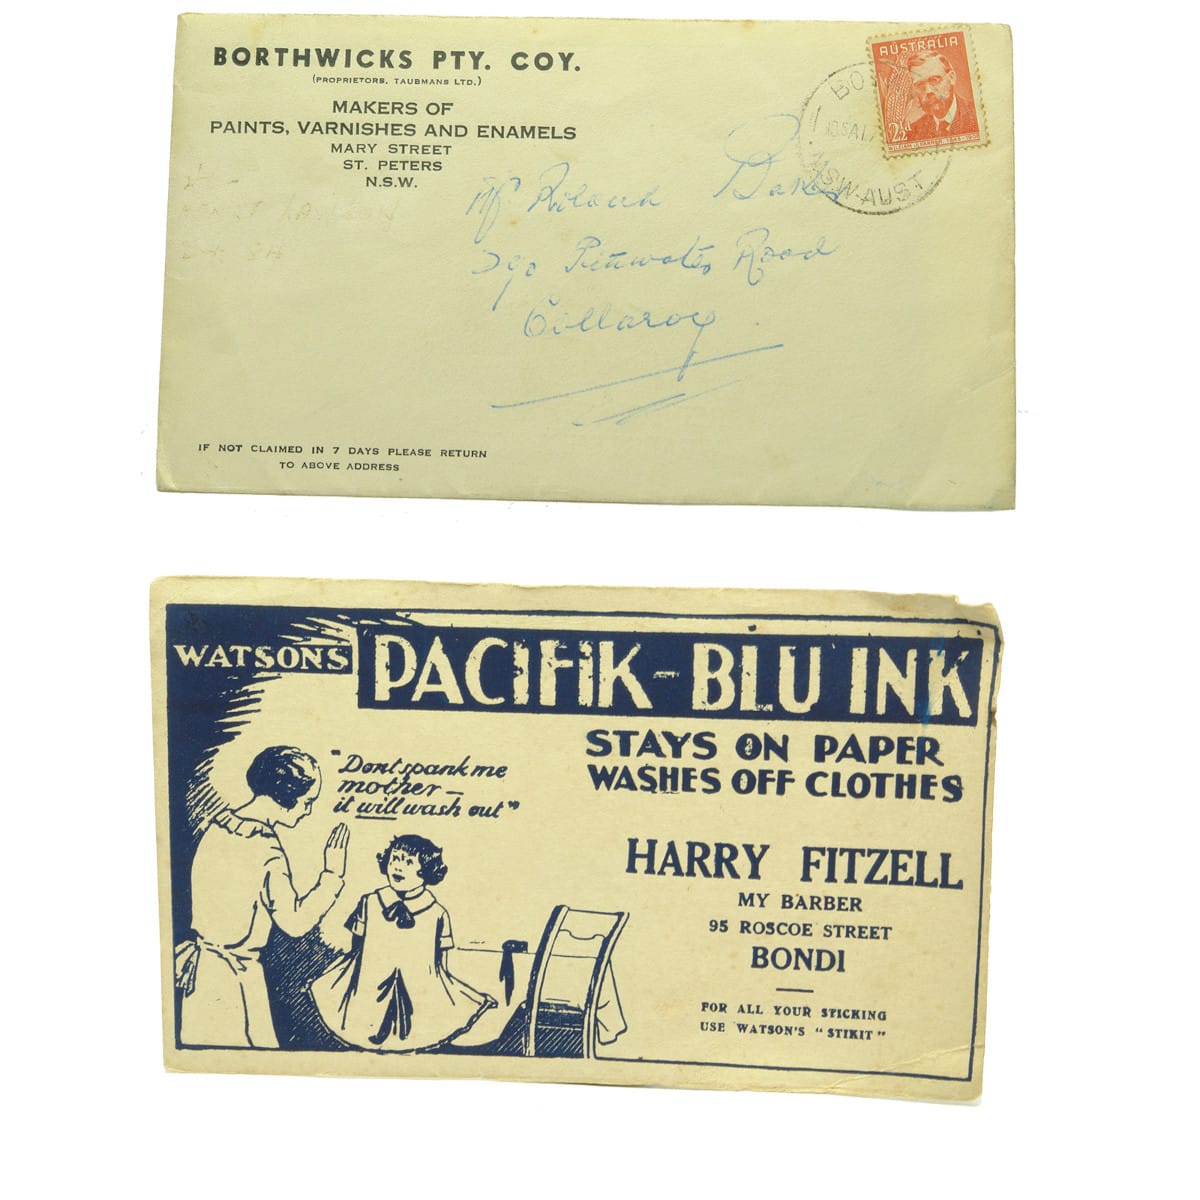 Envelope & Three Blotters. Borthwicks Pty. Coy. Personal Note from Alex Borthwick. AB Paints. Blotter. Watsons Pacifik - Blu Ink. Harry Fitzell, Bondi. (Sydney, New South Wales)